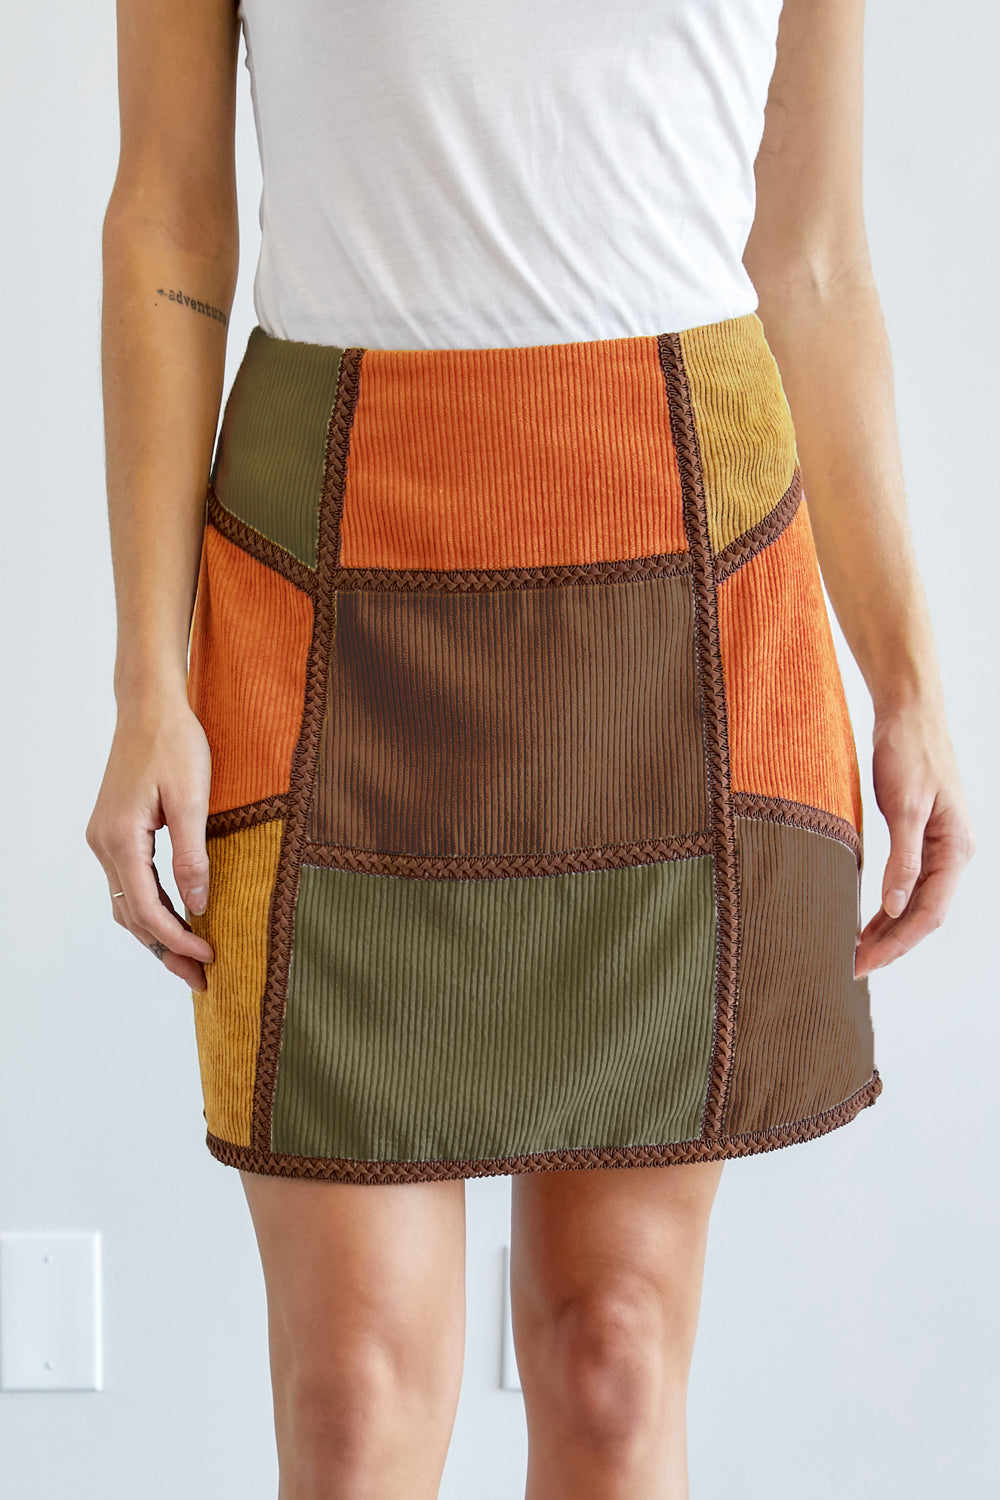 The Paula Patchwork Skirt